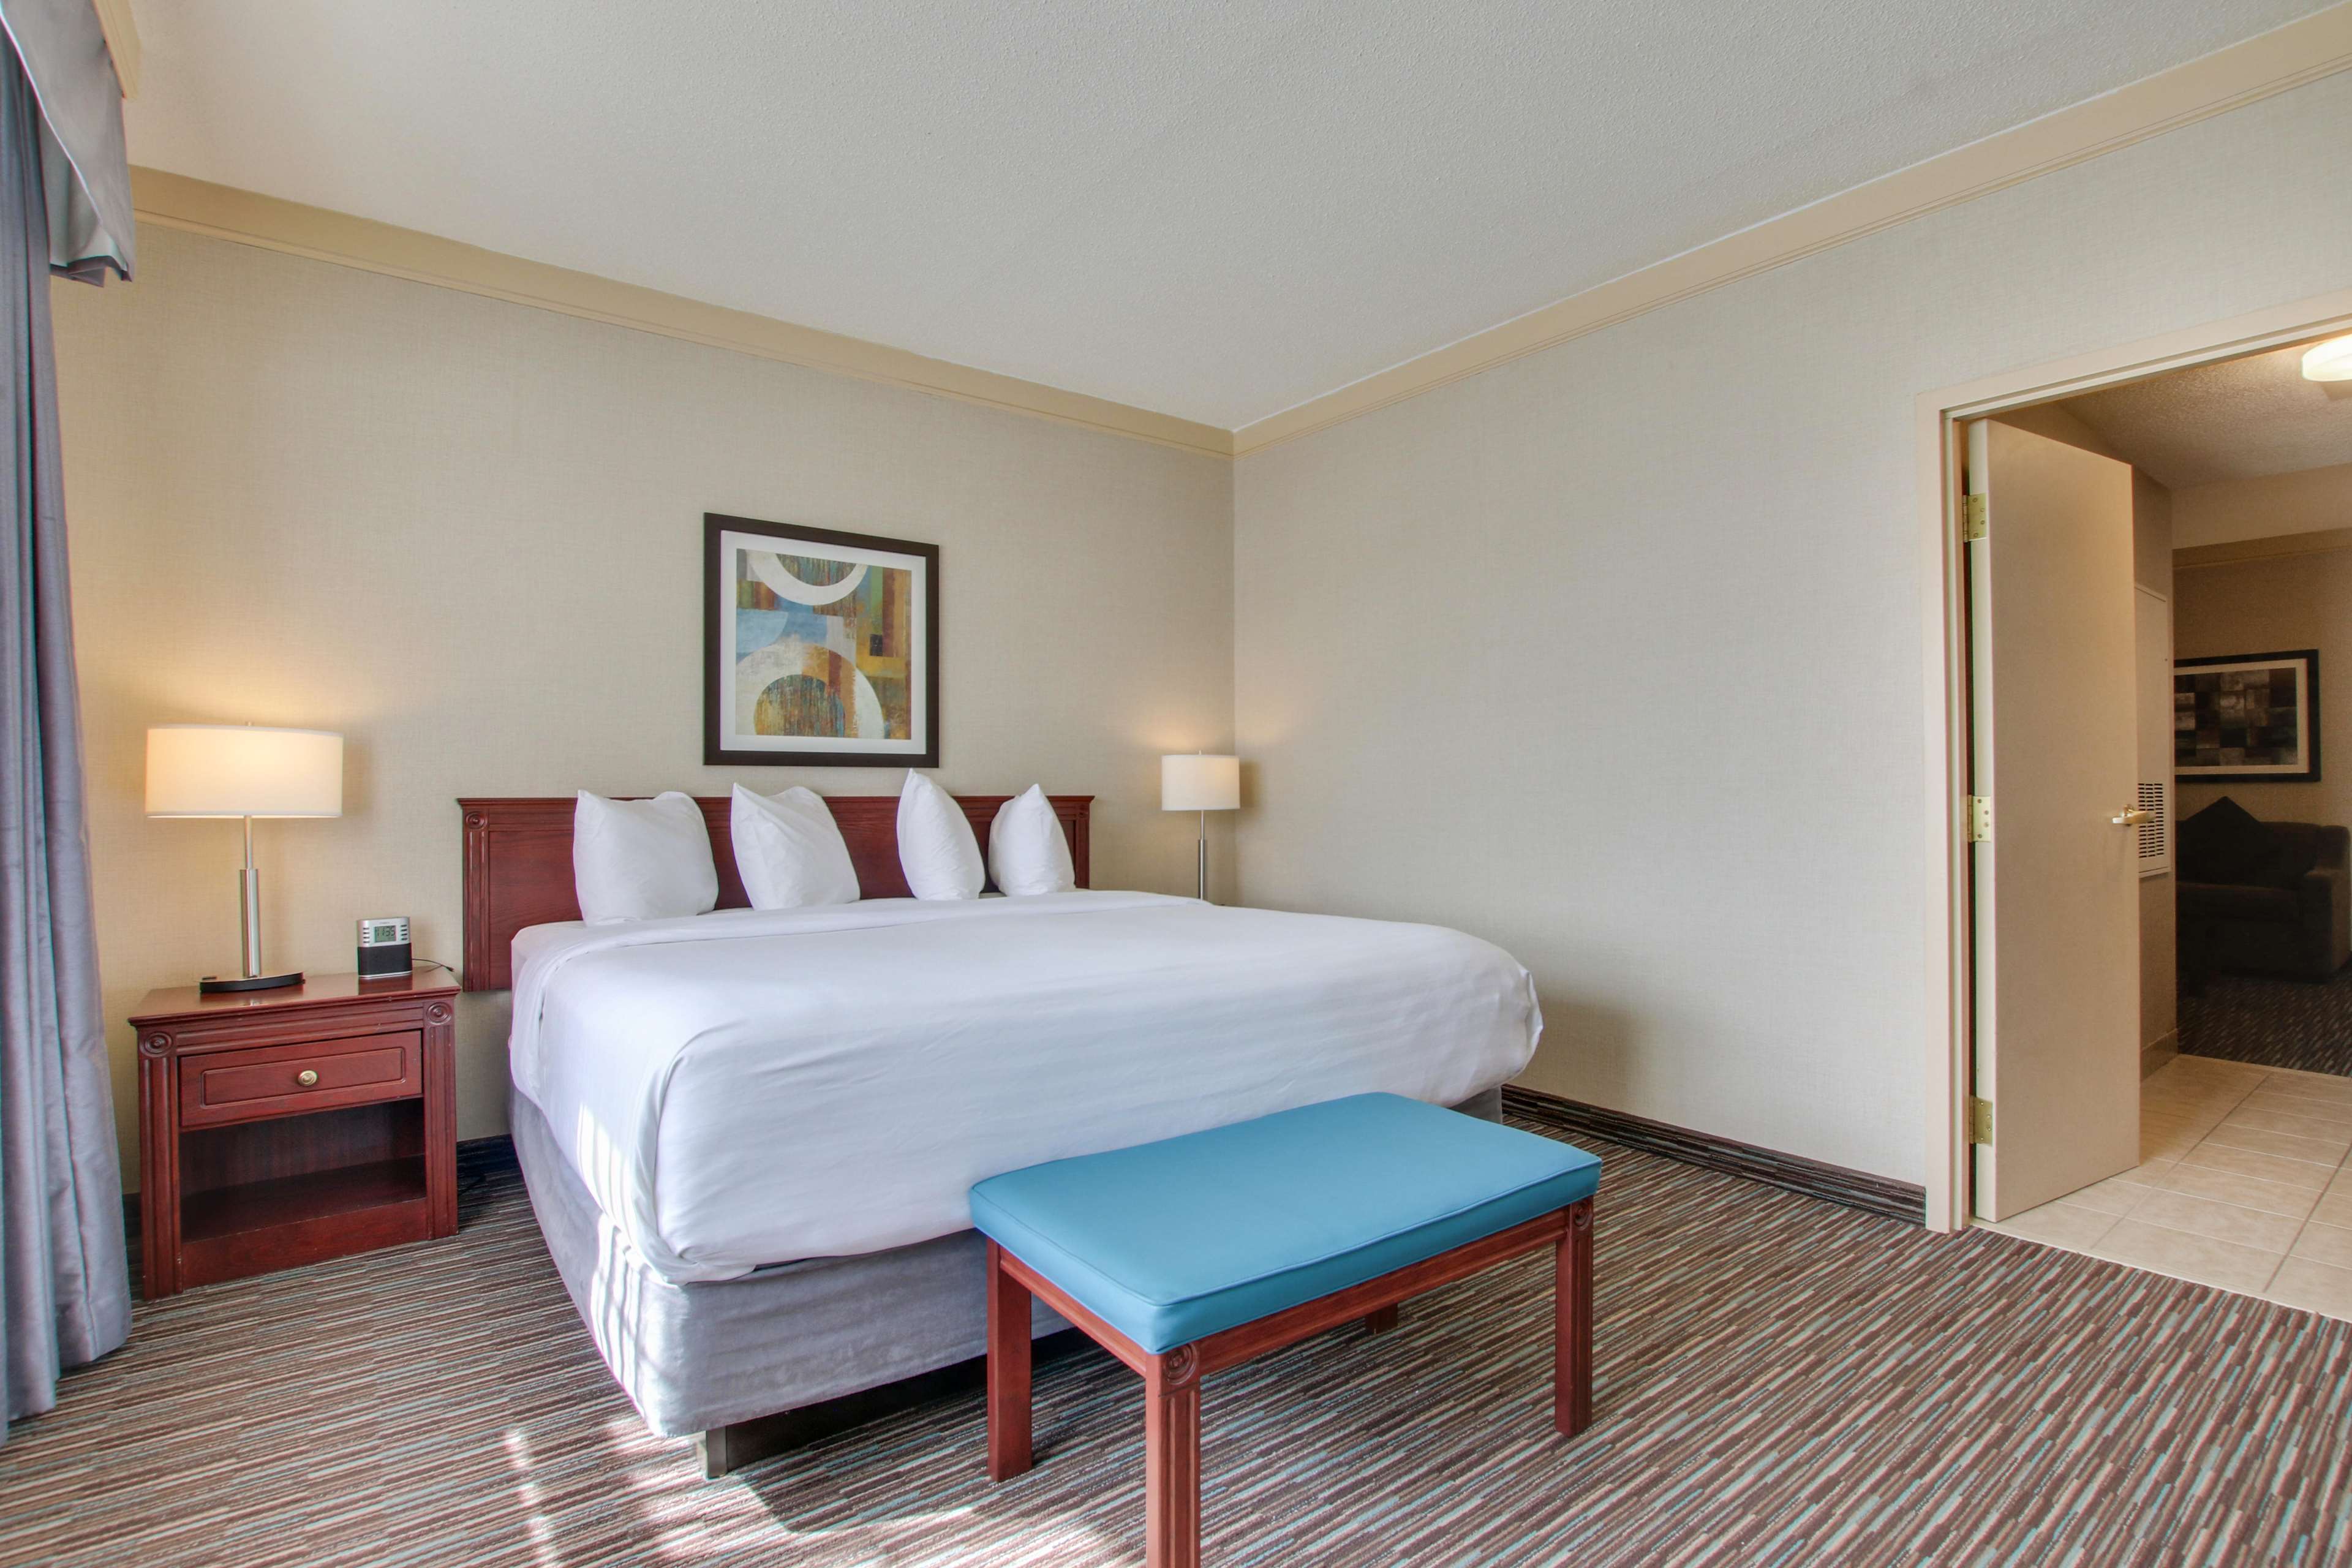 suite 2 rooms Best Western Brantford Hotel And Conference Centre Brantford (519)753-8651